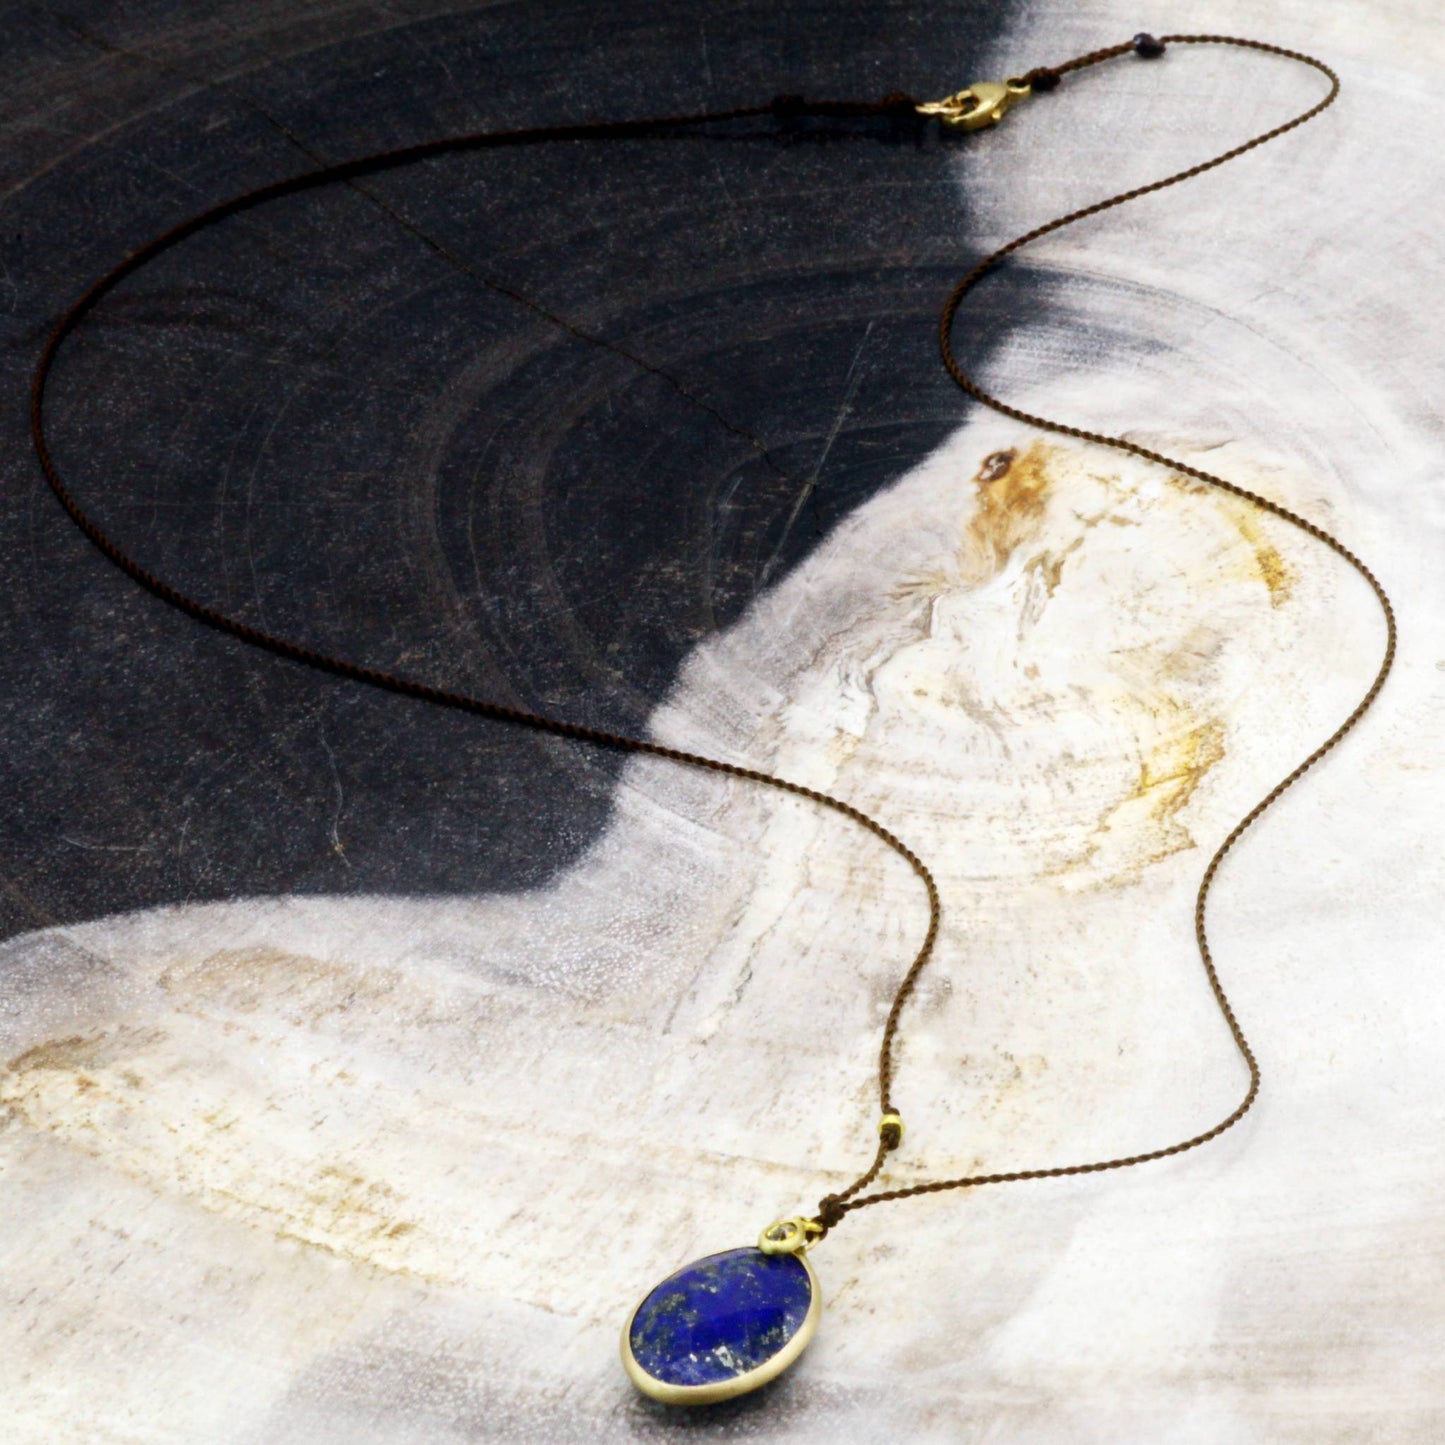 Margaret Solow Jewelry | Lapis 14k + Diamond 18k Gold Drop Necklace | Firecracker